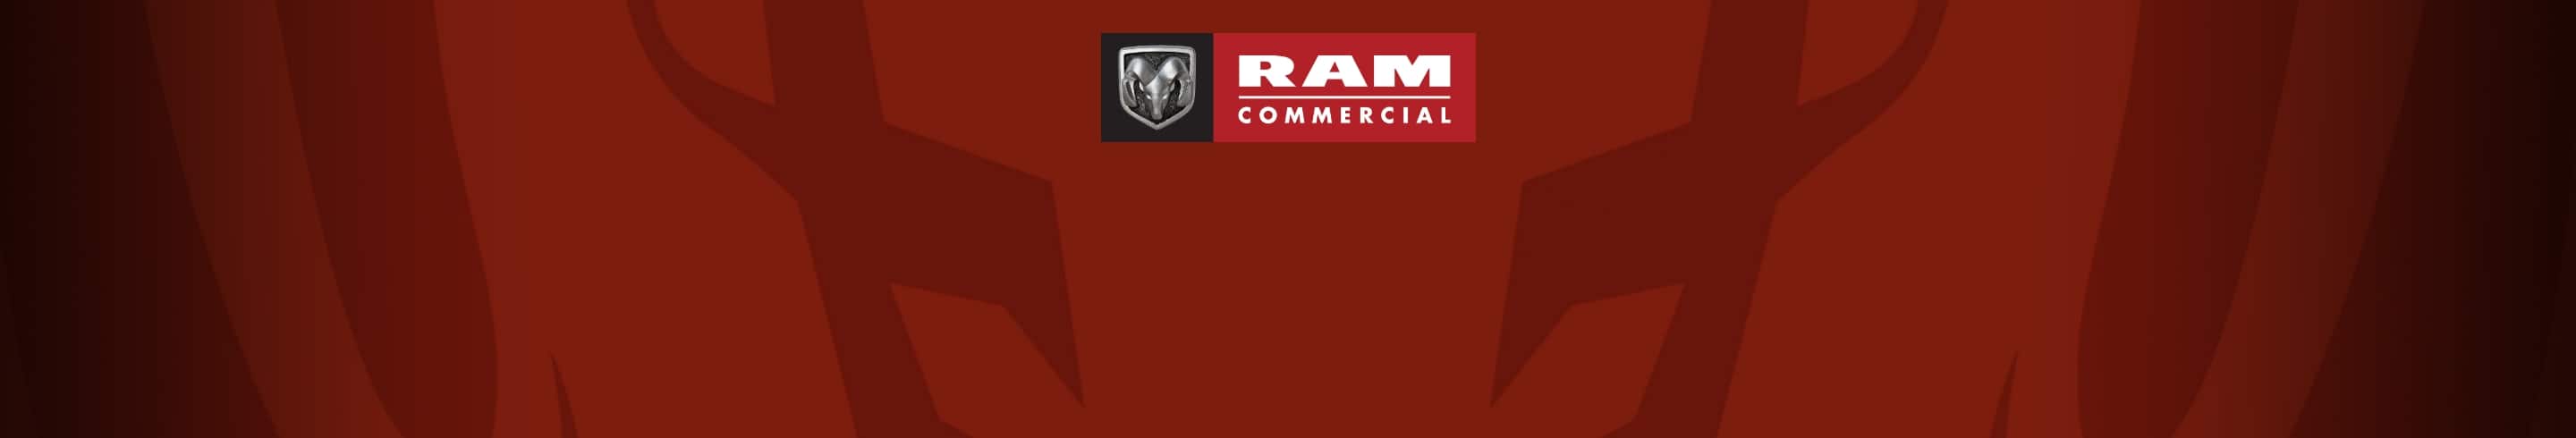 Ram Commercial.